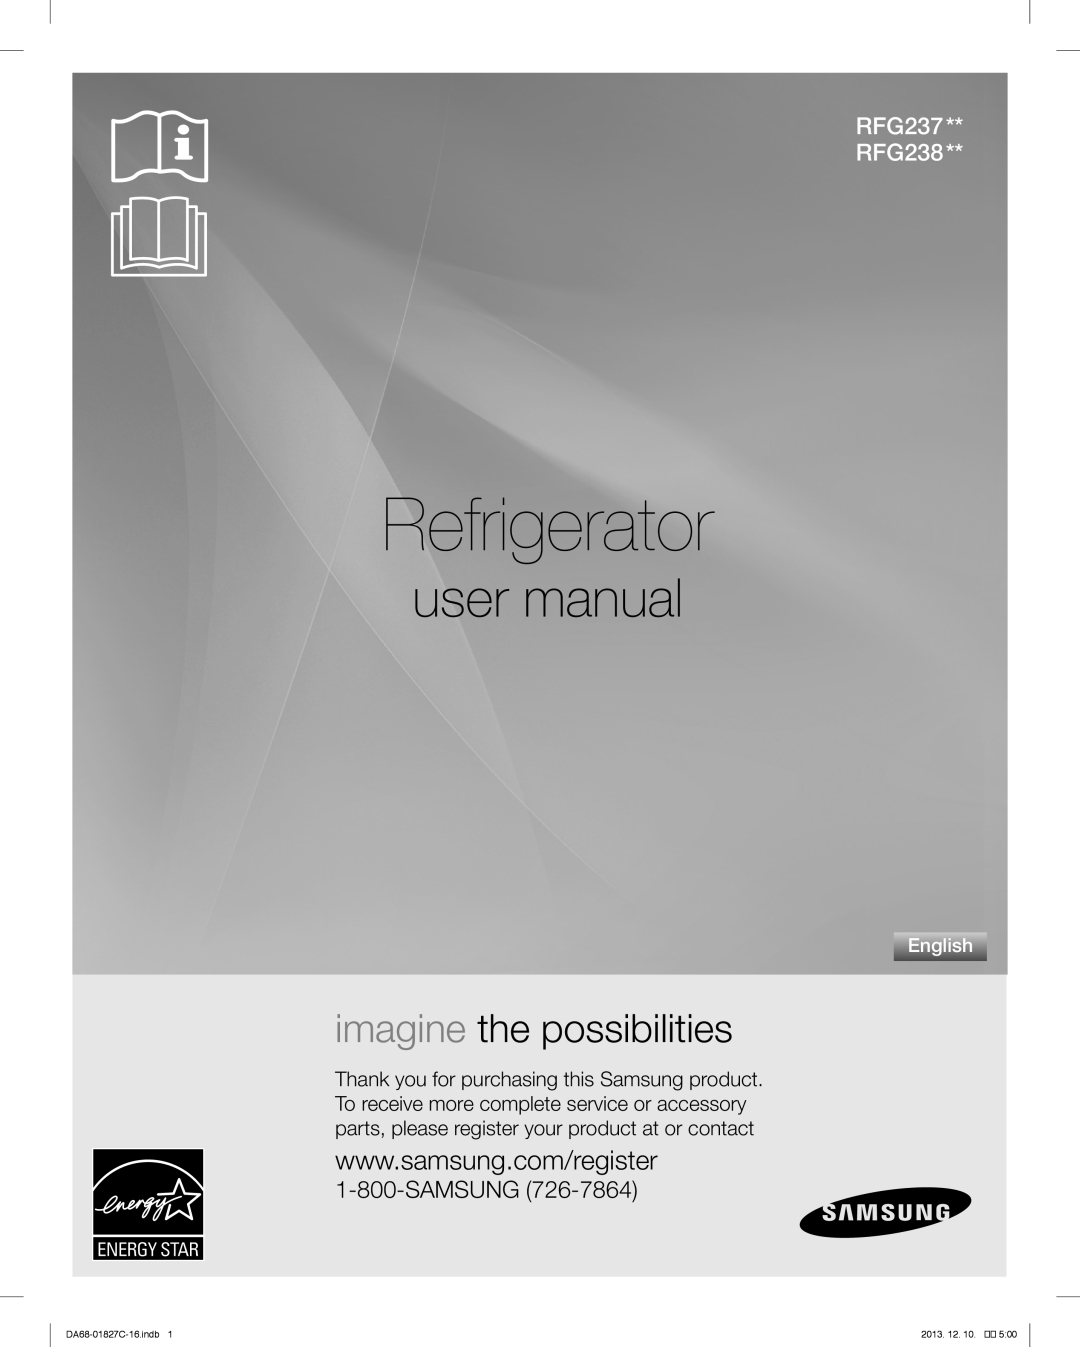 Samsung RFG237AAWP user manual Refrigerator, imagine the possibilities, RFG237 RFG238, English, DA68-01827B-17.indb 